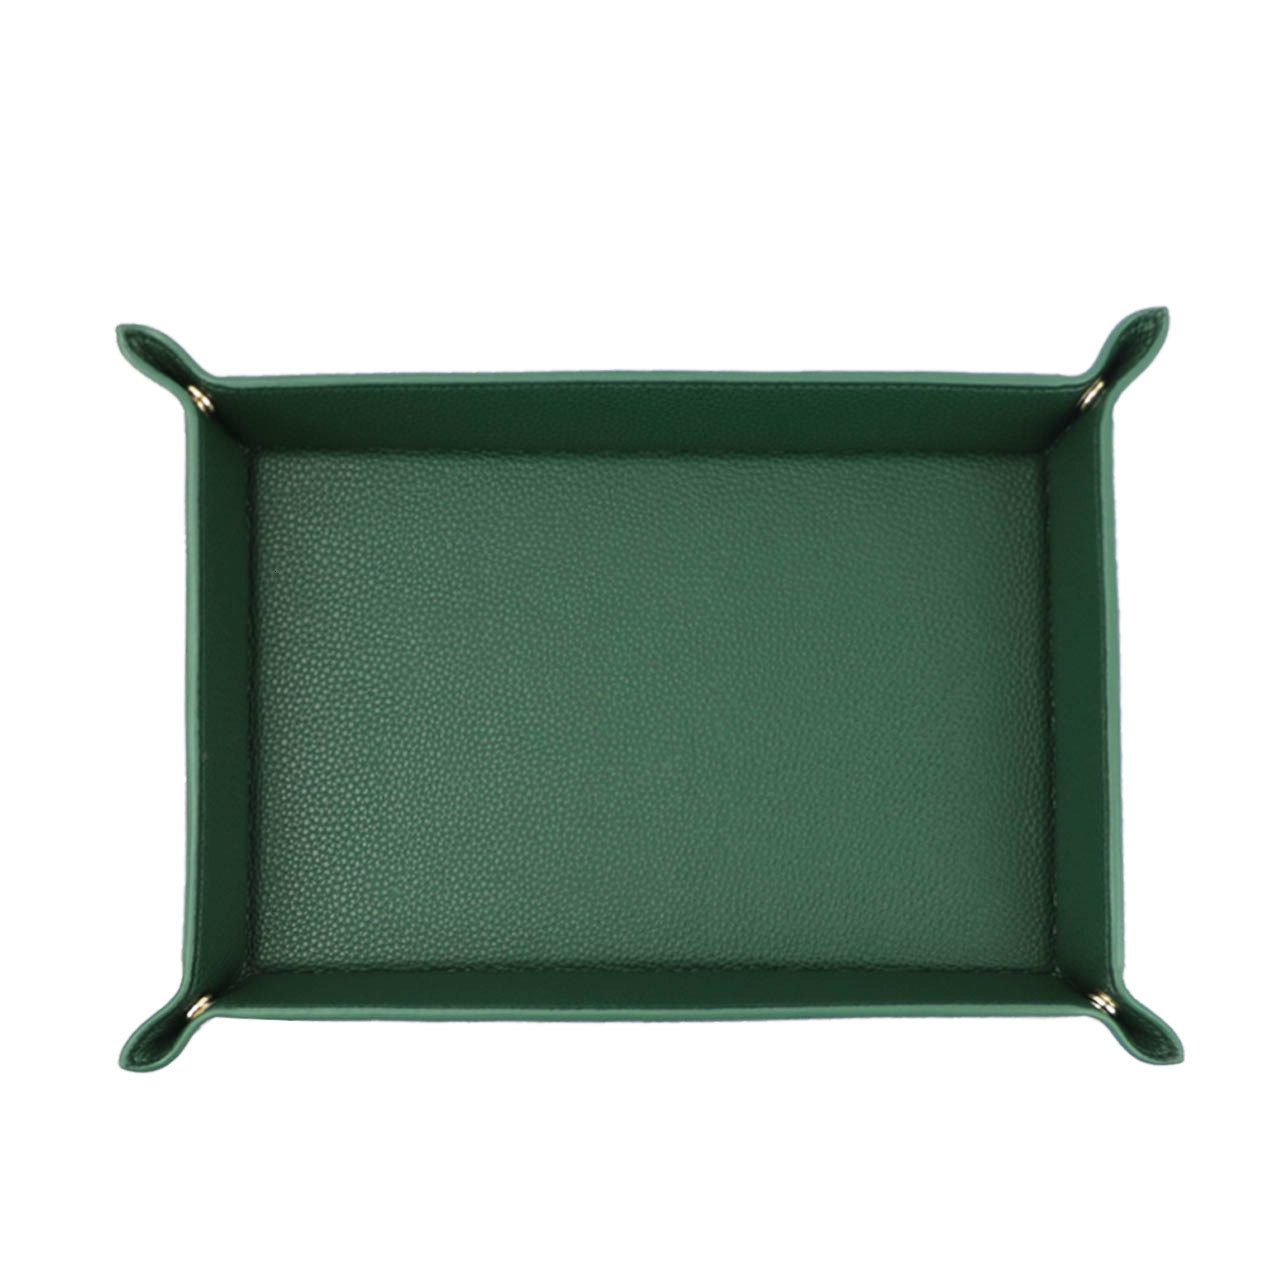 Pebble Green scuro-22x15x3 cm